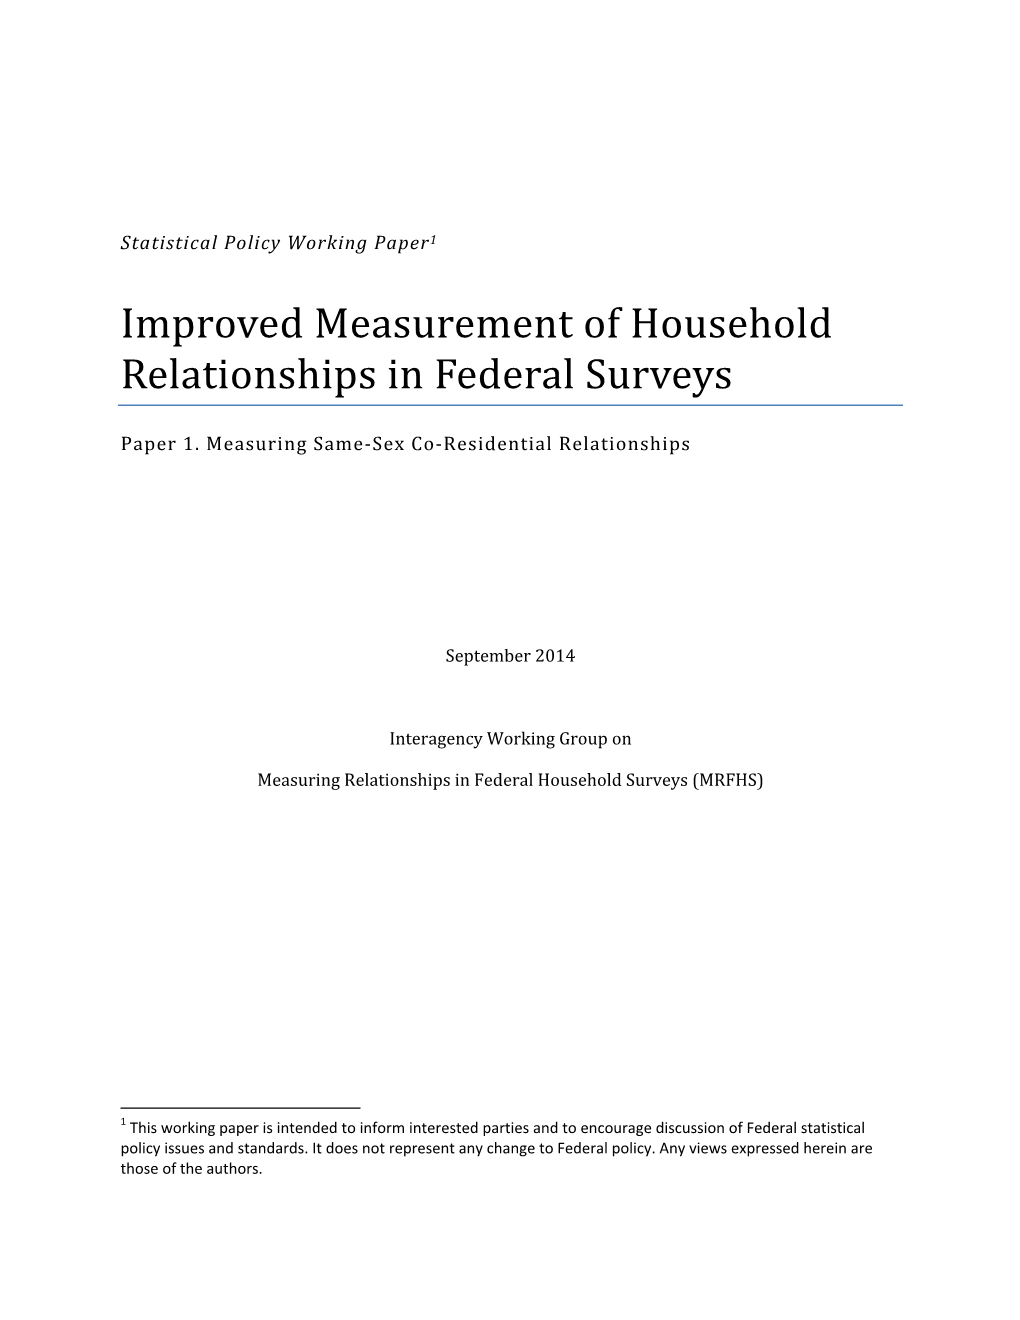 Improved Measurement of Household Relationships in Federal Surveys